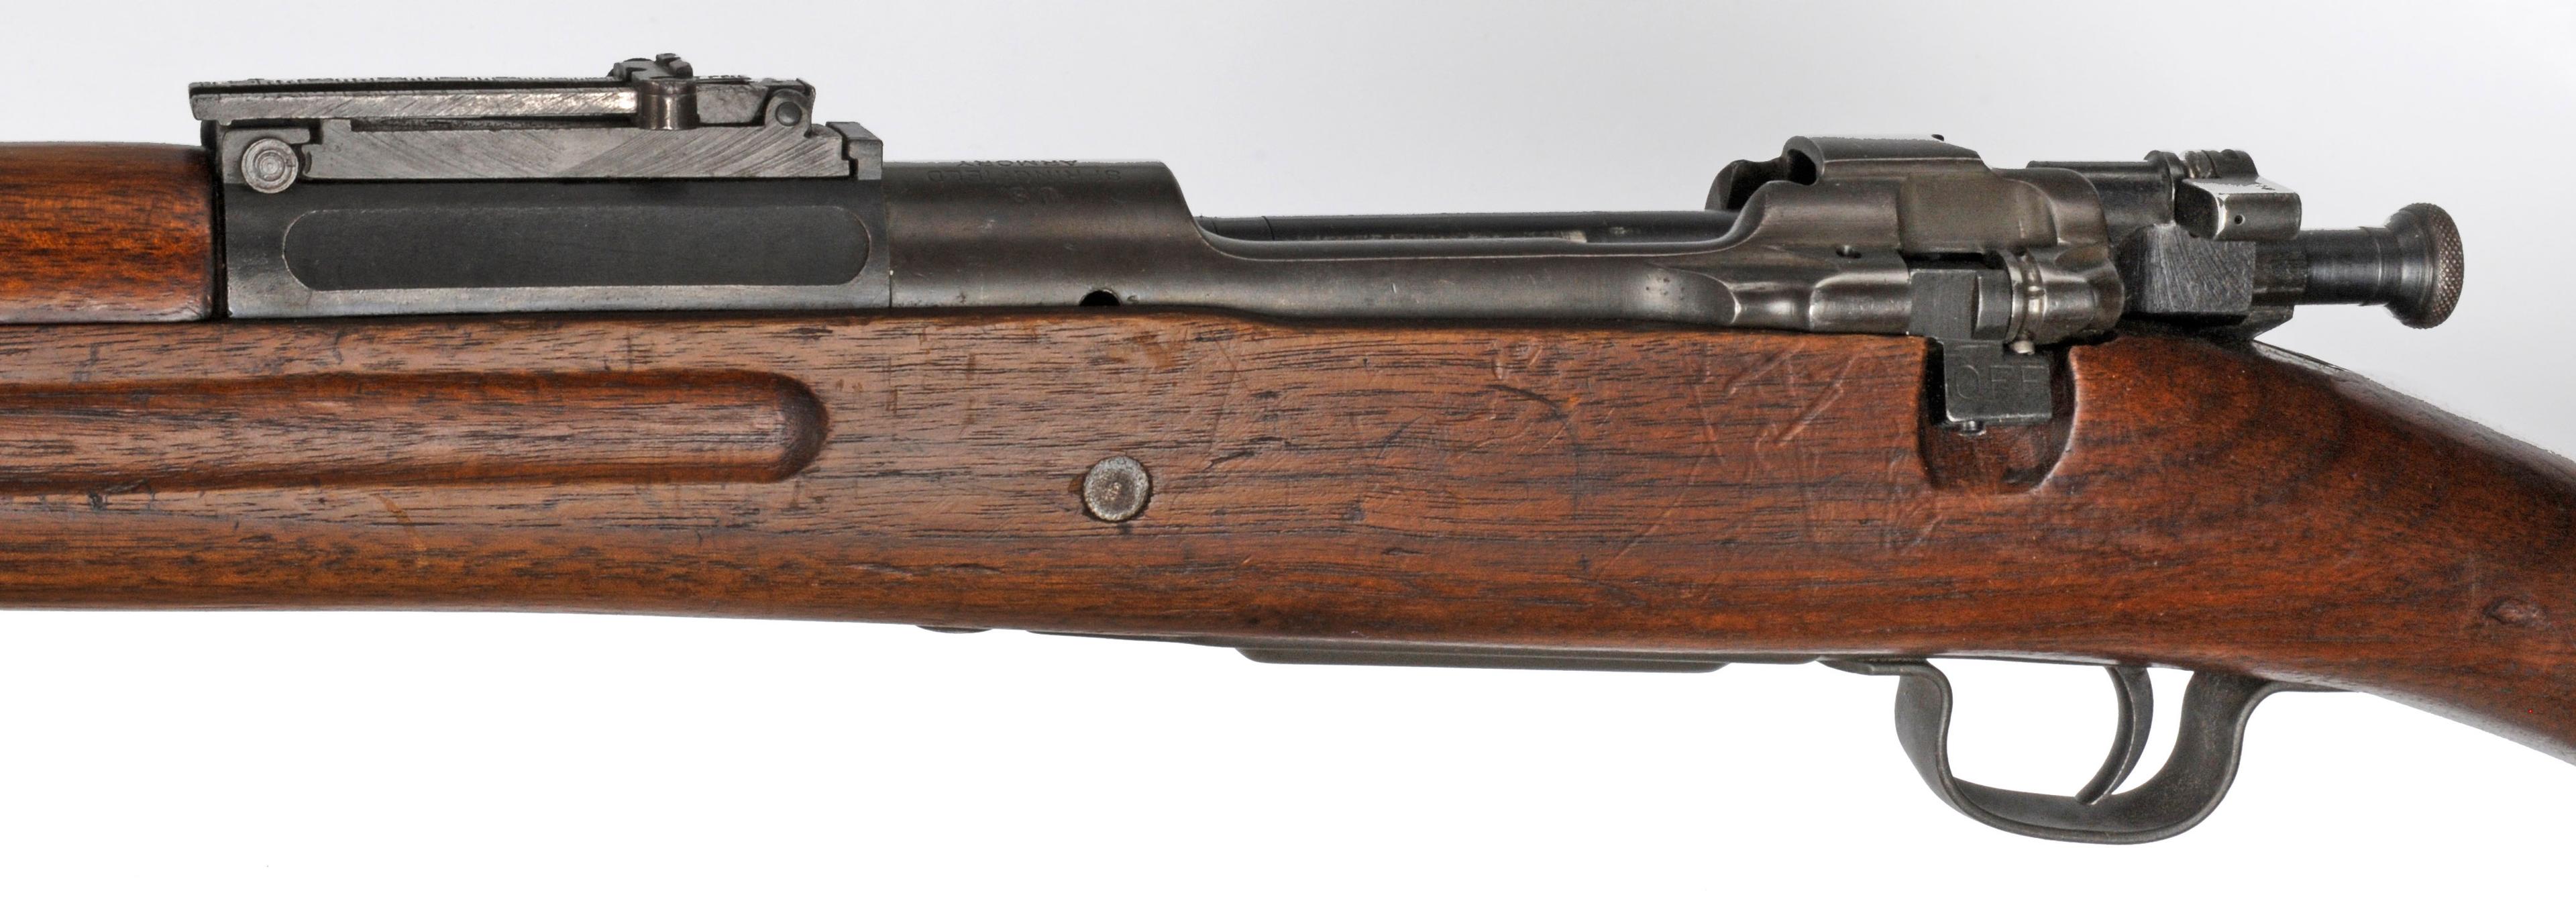 Springfield Model 1903 .30-06 Bolt Action Rifle - FFL #638695  (MSQ 1)